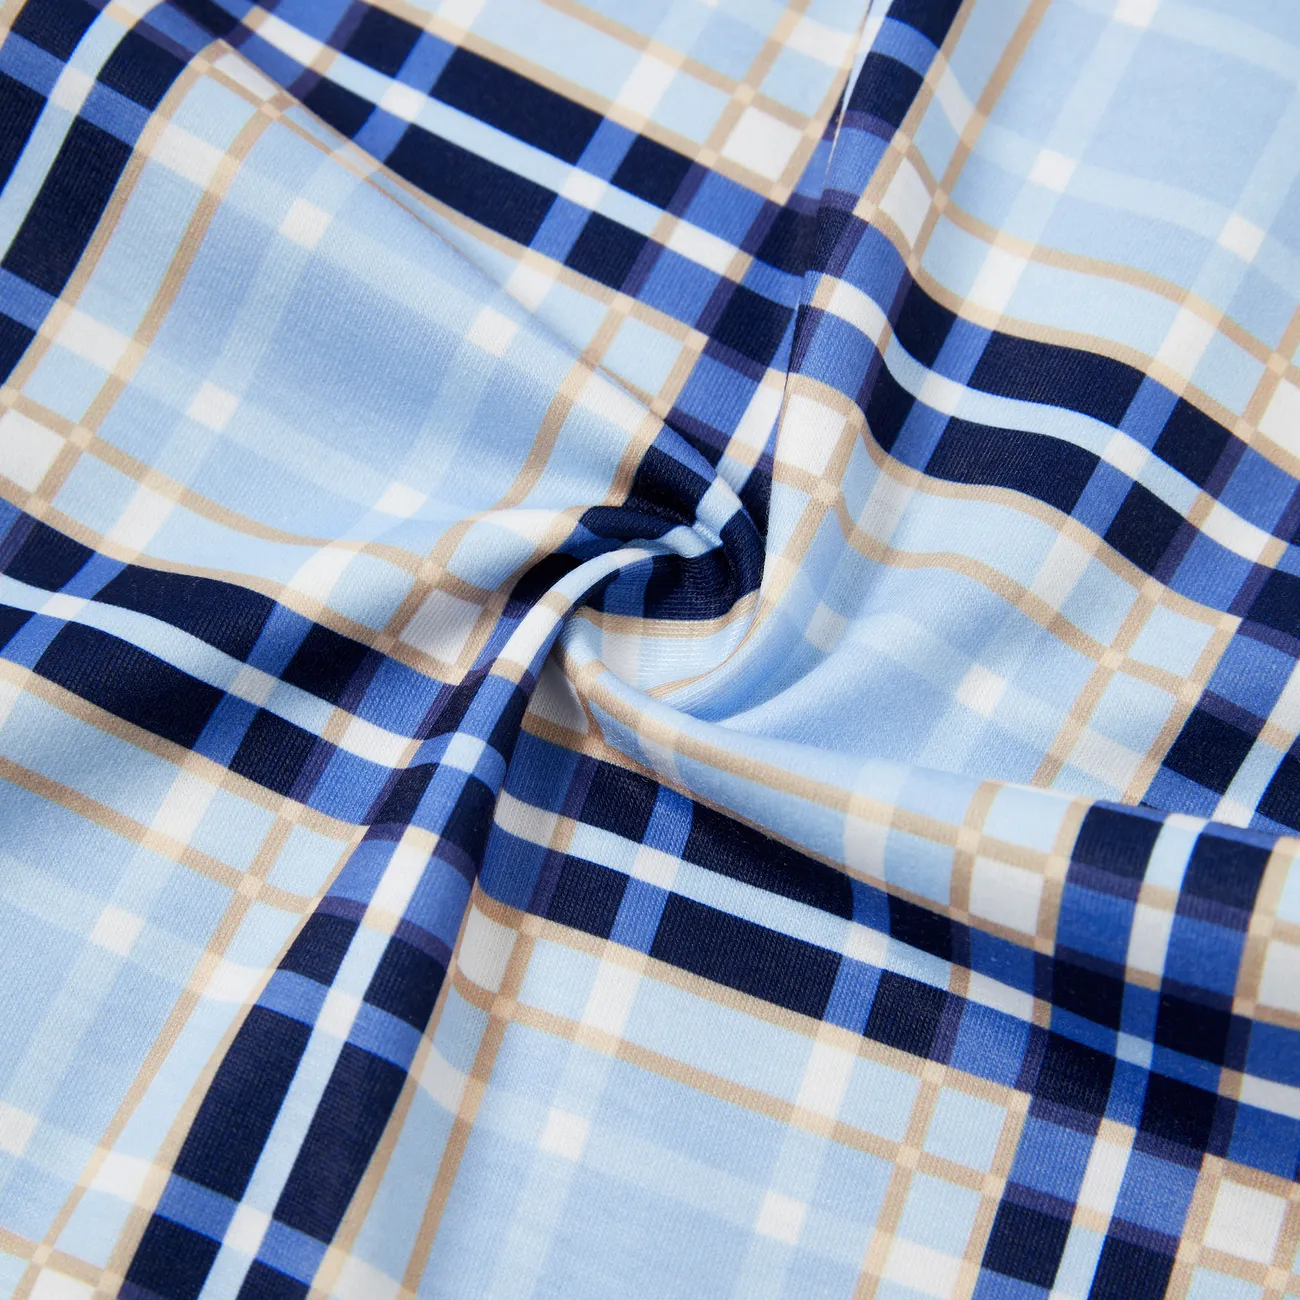 Family Matching Pajamas Sets Glow in the Dark Slogan Dark Blue Top and Plaid Drawstring Shorts (Flame Resistant) blueblack big image 1